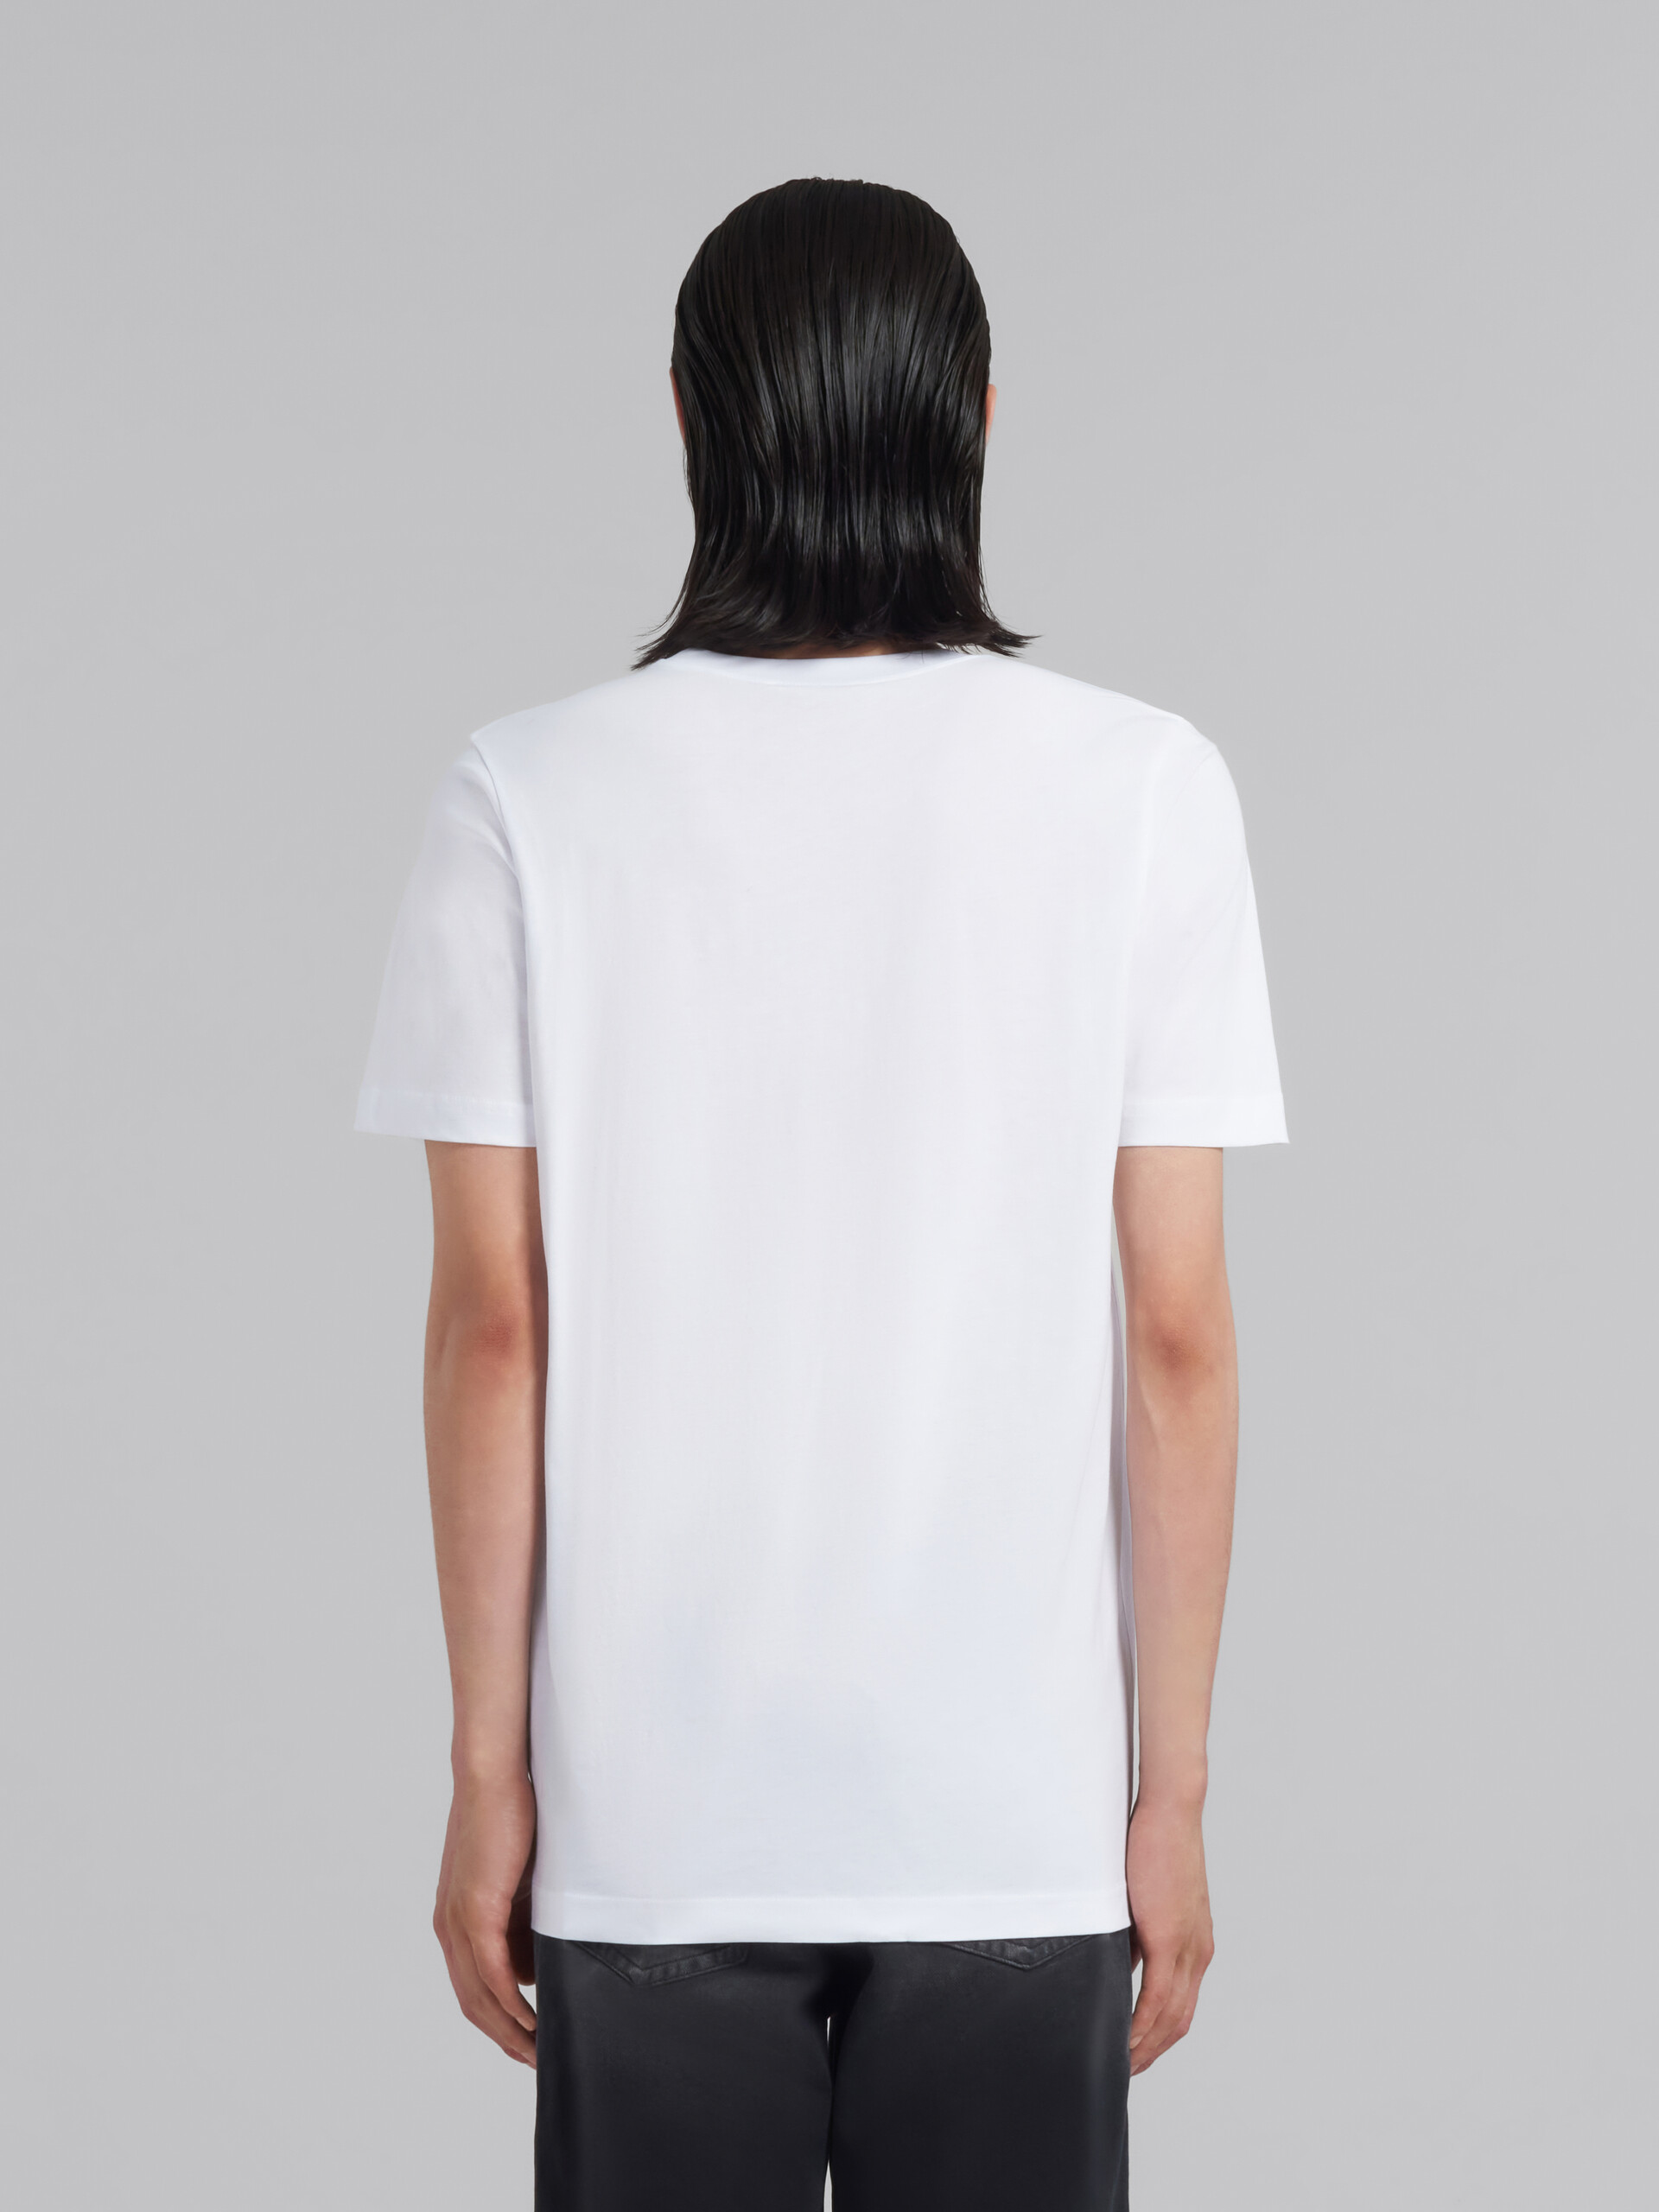 Dunkelblaues T-Shirt aus Baumwolle mit Logo - T-shirts - Image 3